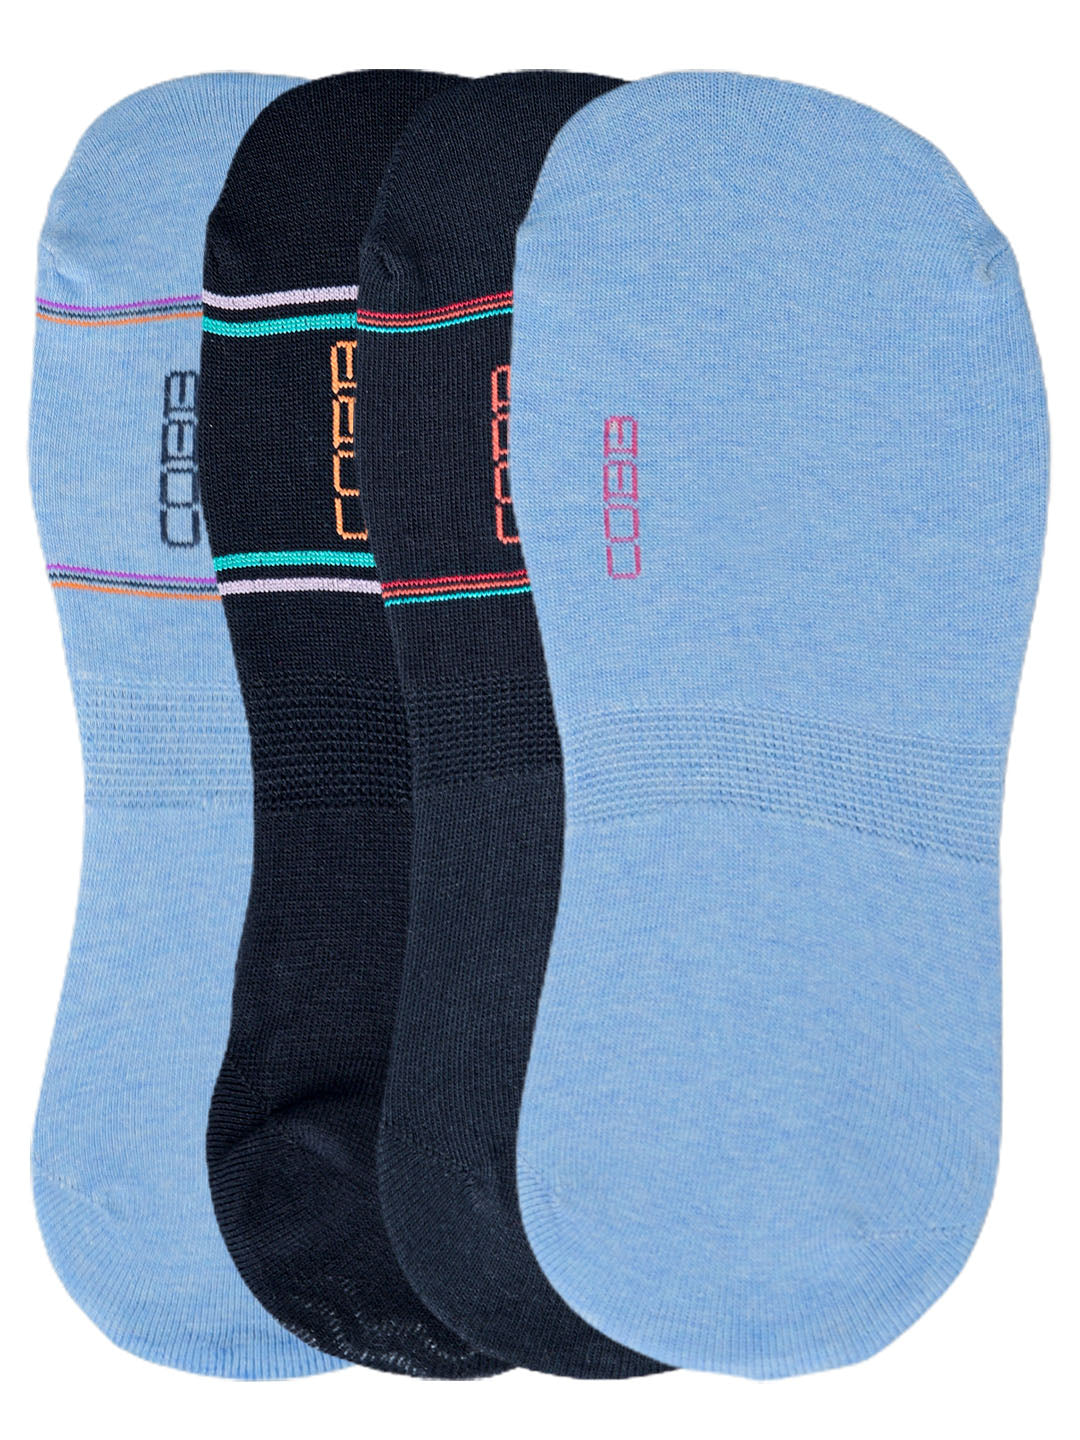 Cobb Multi Color Footie Shoe Liner Socks Pack of 4